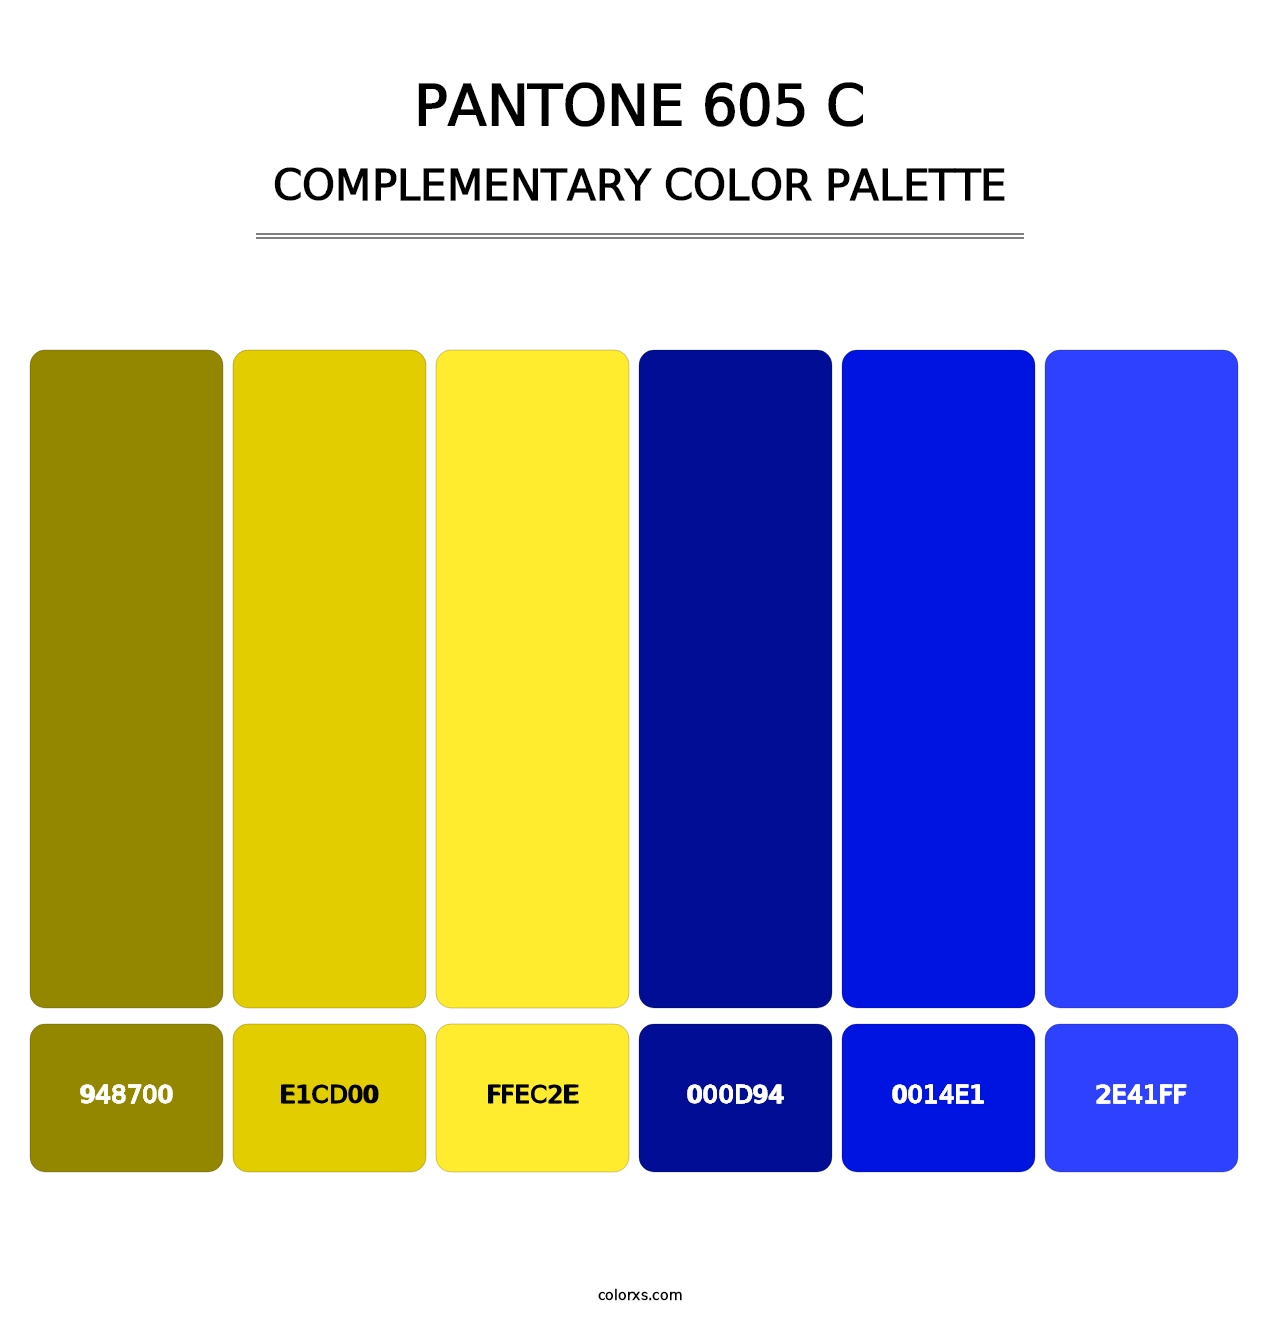 PANTONE 605 C - Complementary Color Palette